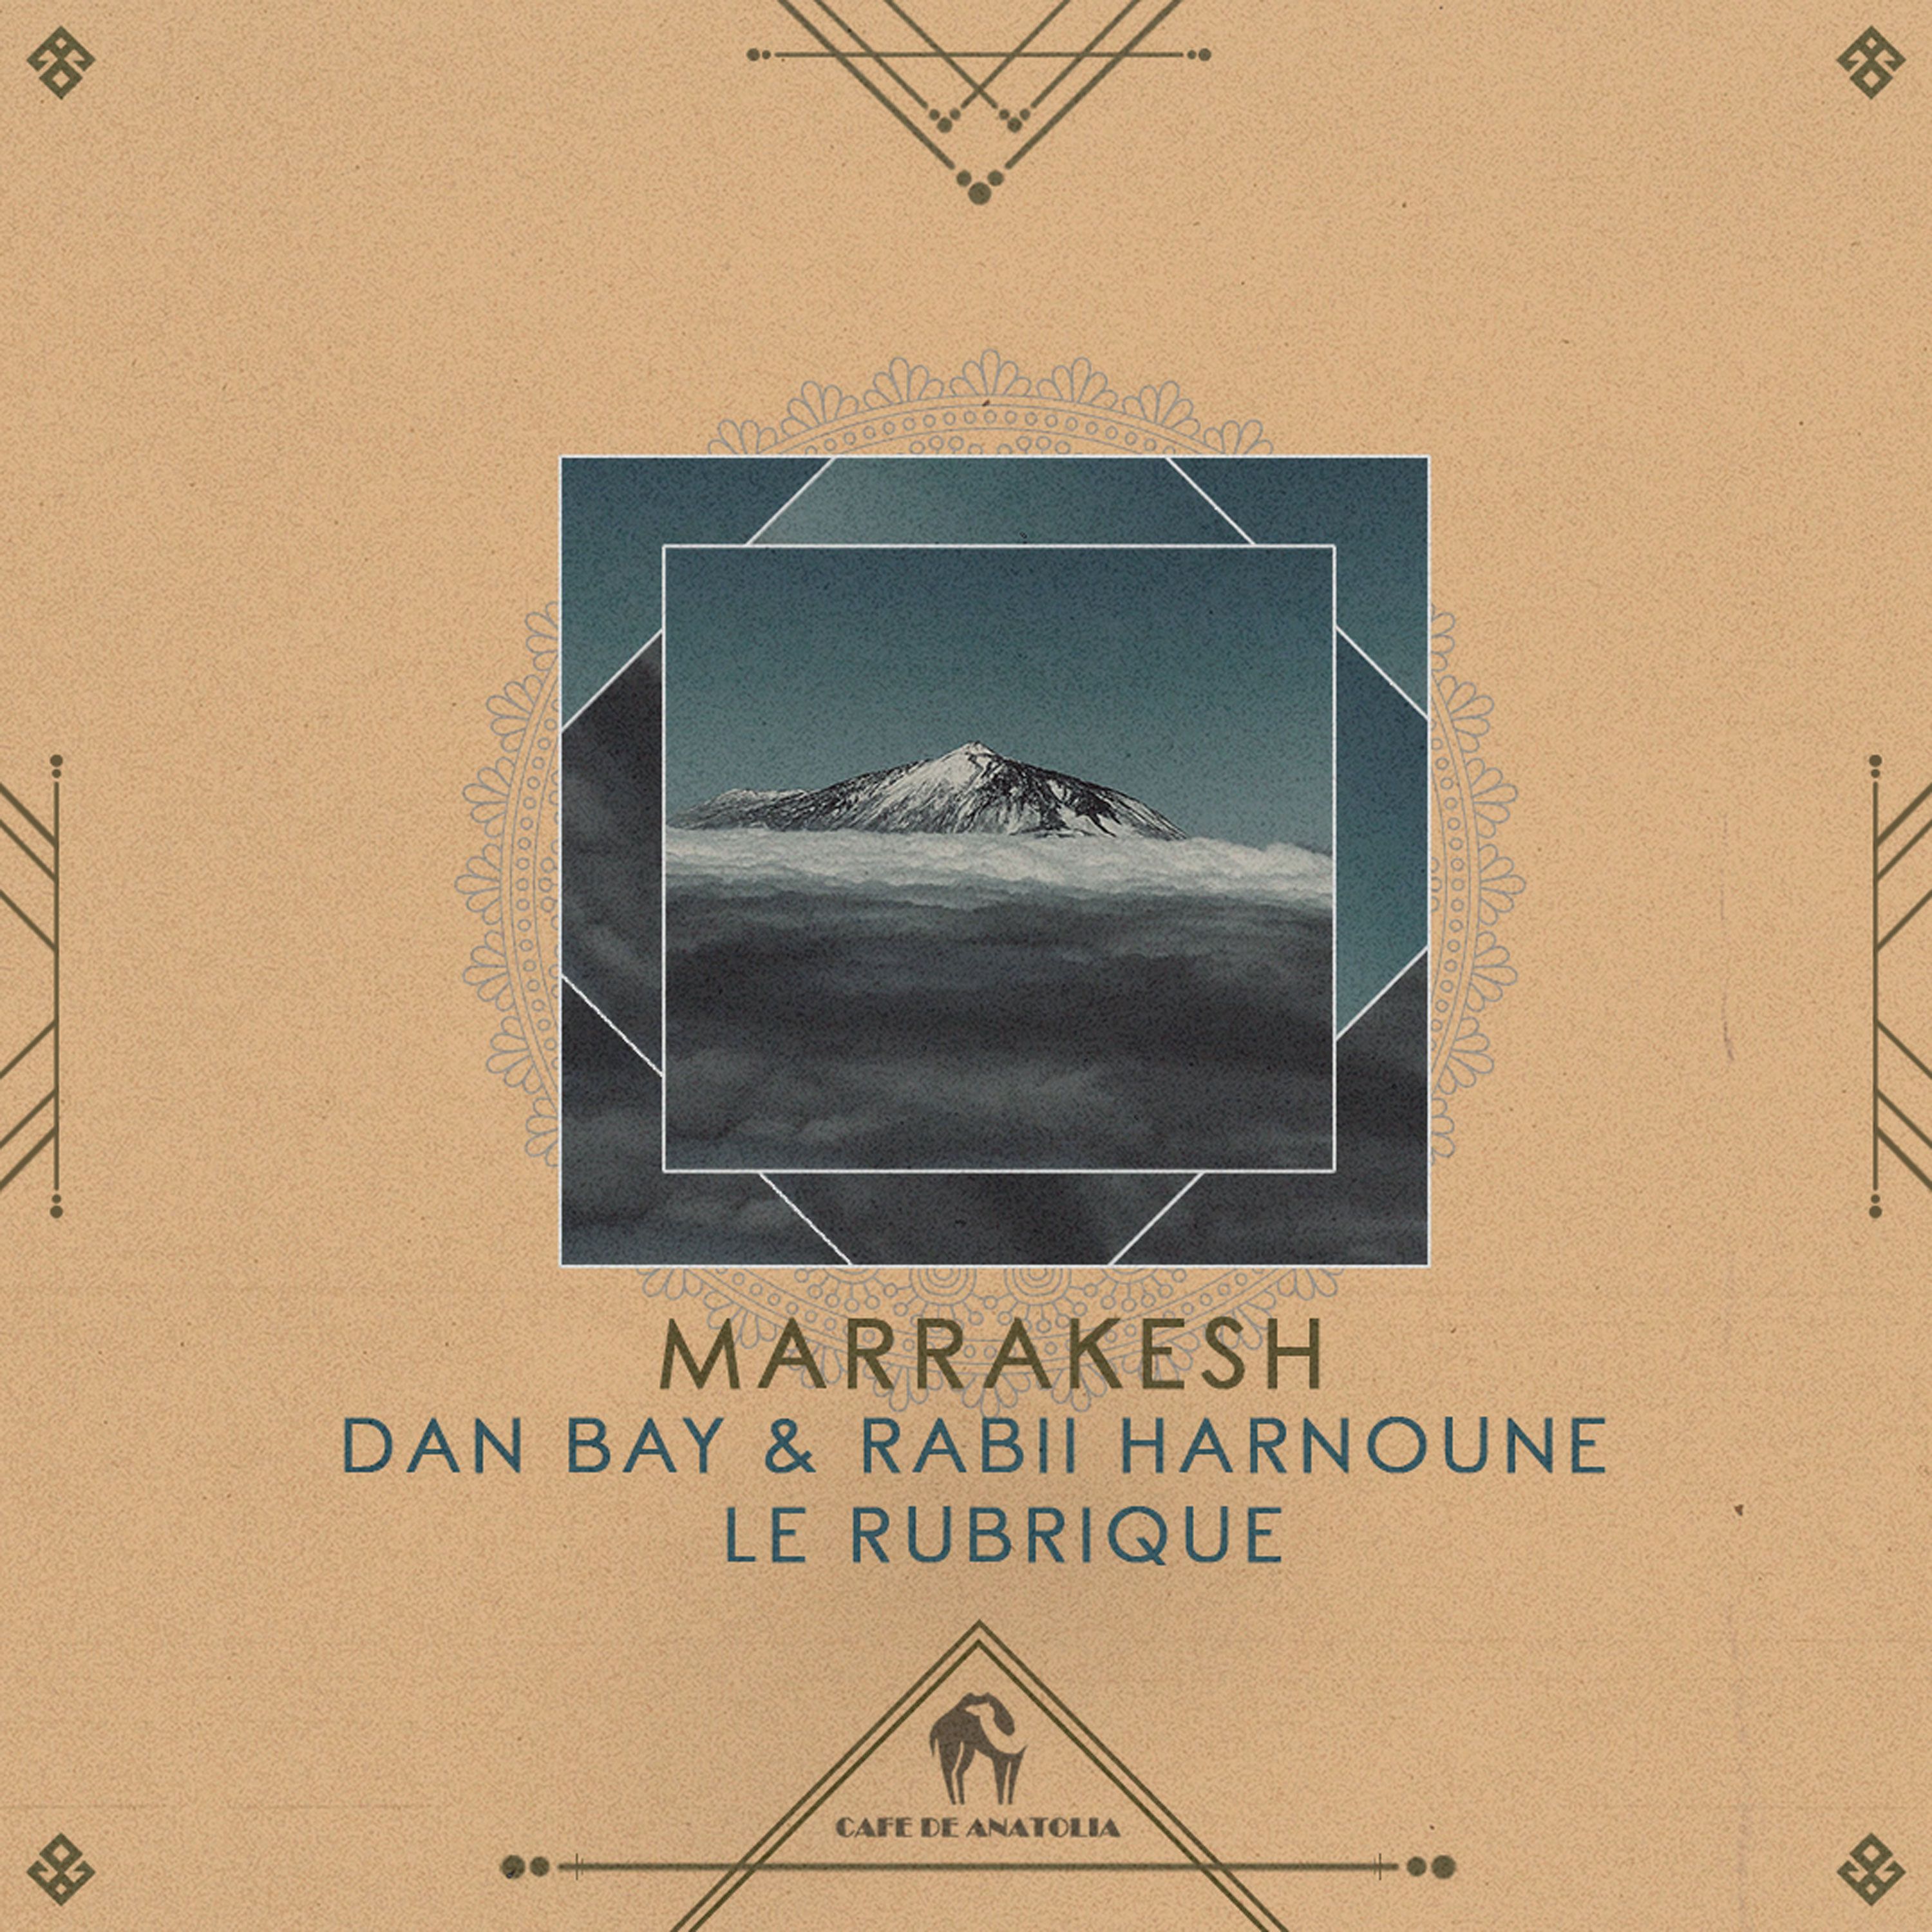 Dan Bay, Le Rubrique, Rabii Harnoune - Marrakesh (Cafe De Anatolia)